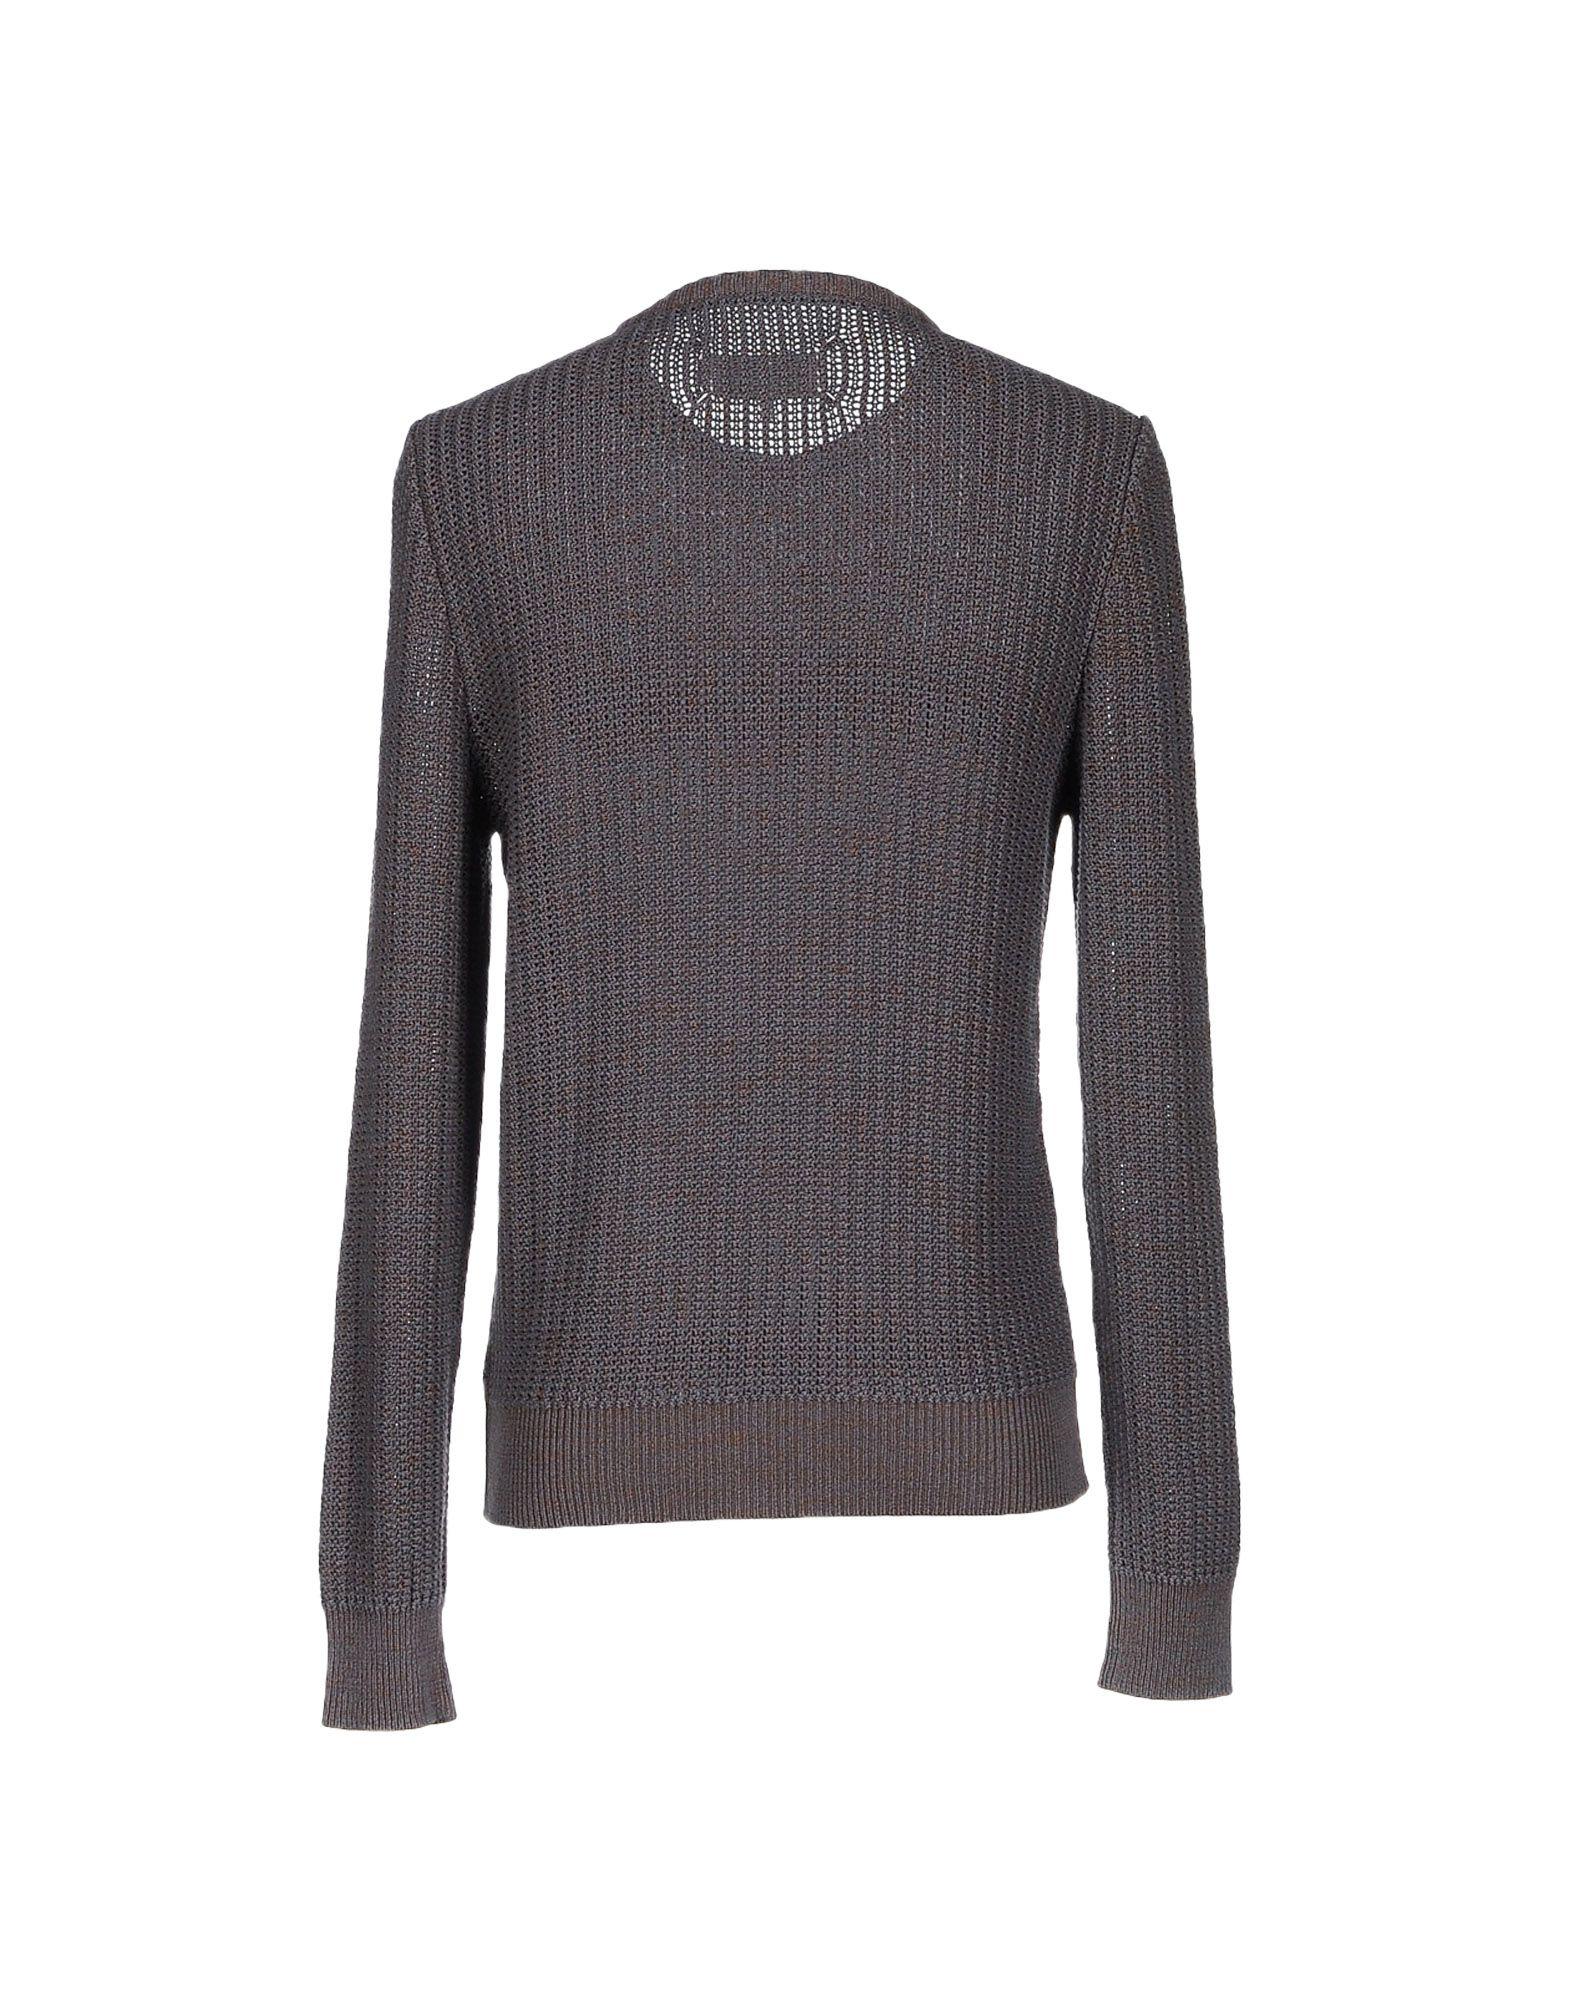 Lyst - Maison margiela Sweater in Gray for Men